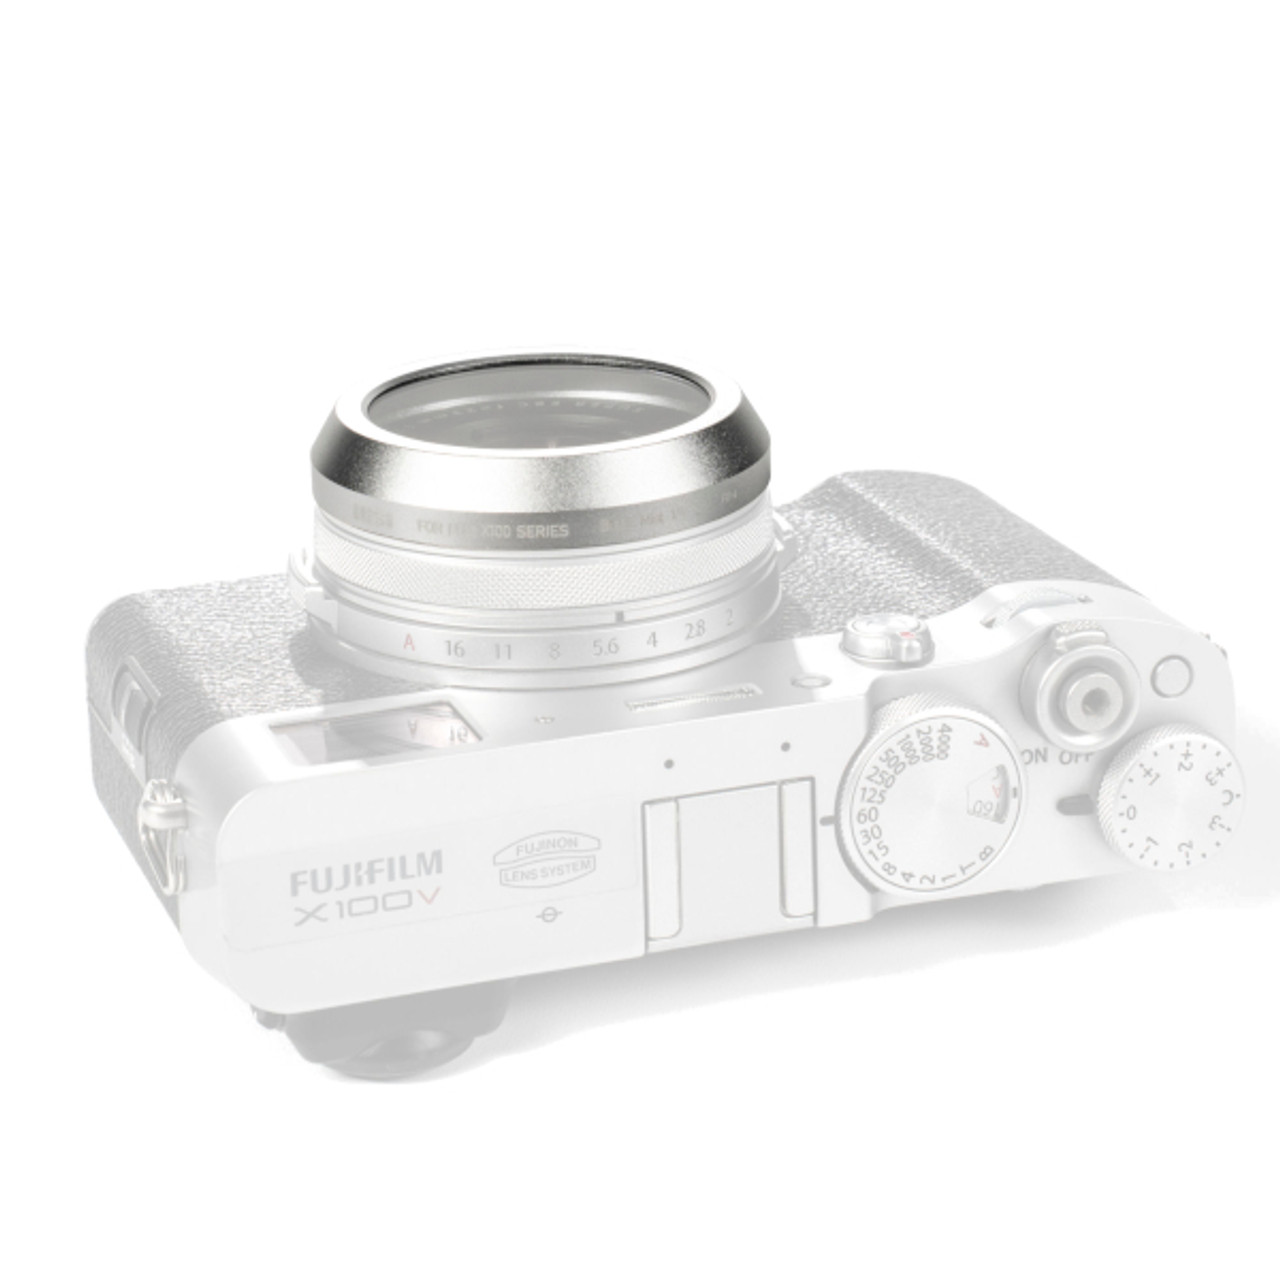 NiSi Black Mist 1/4 Filter for Fujifilm X100 Silver